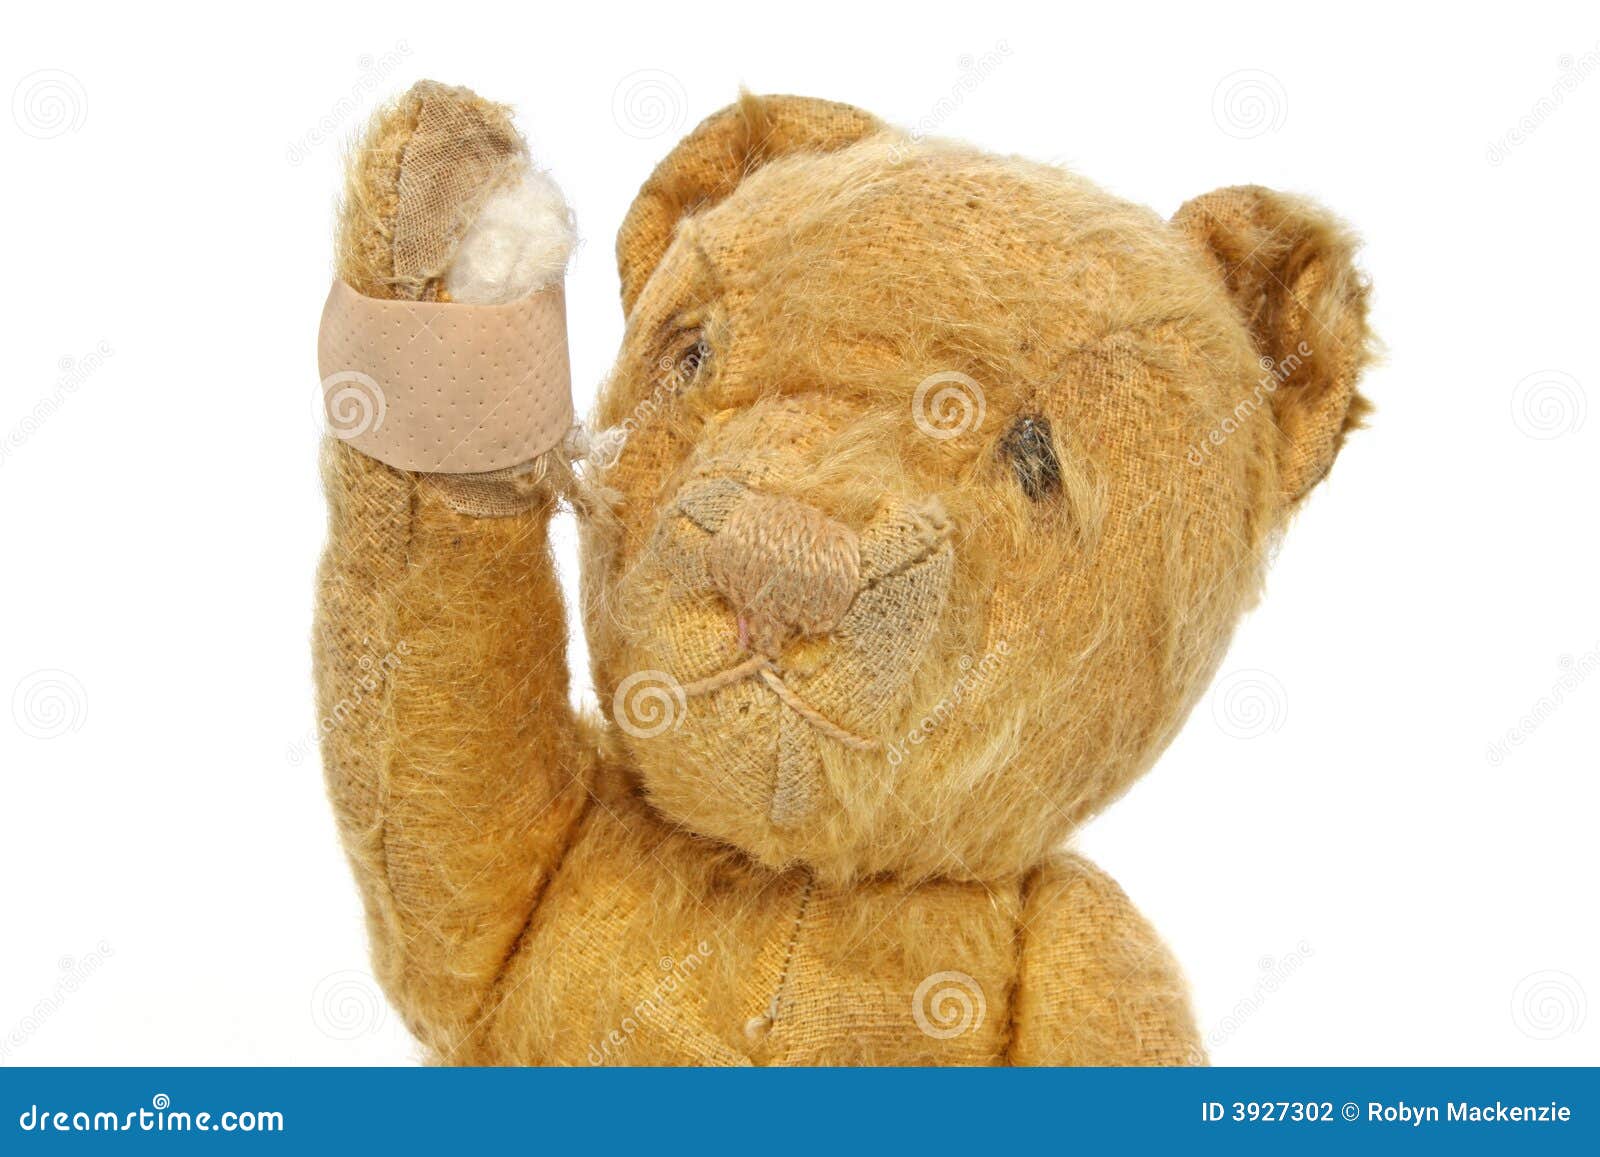 injured teddy bear clip art - photo #36